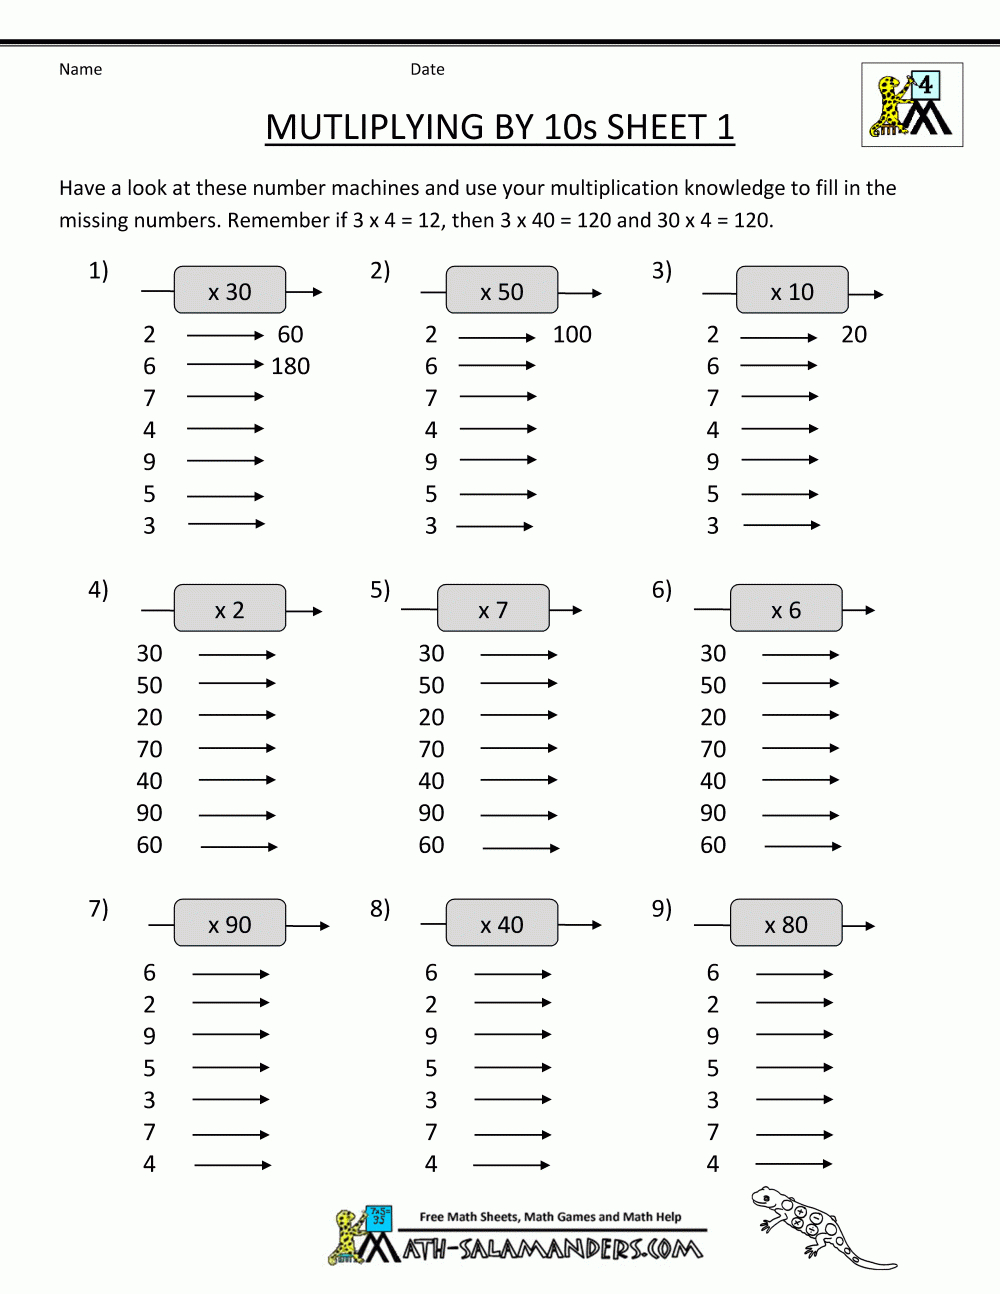 Multiplication Fact Sheets - Free Printable Math Worksheets Multiplication Facts